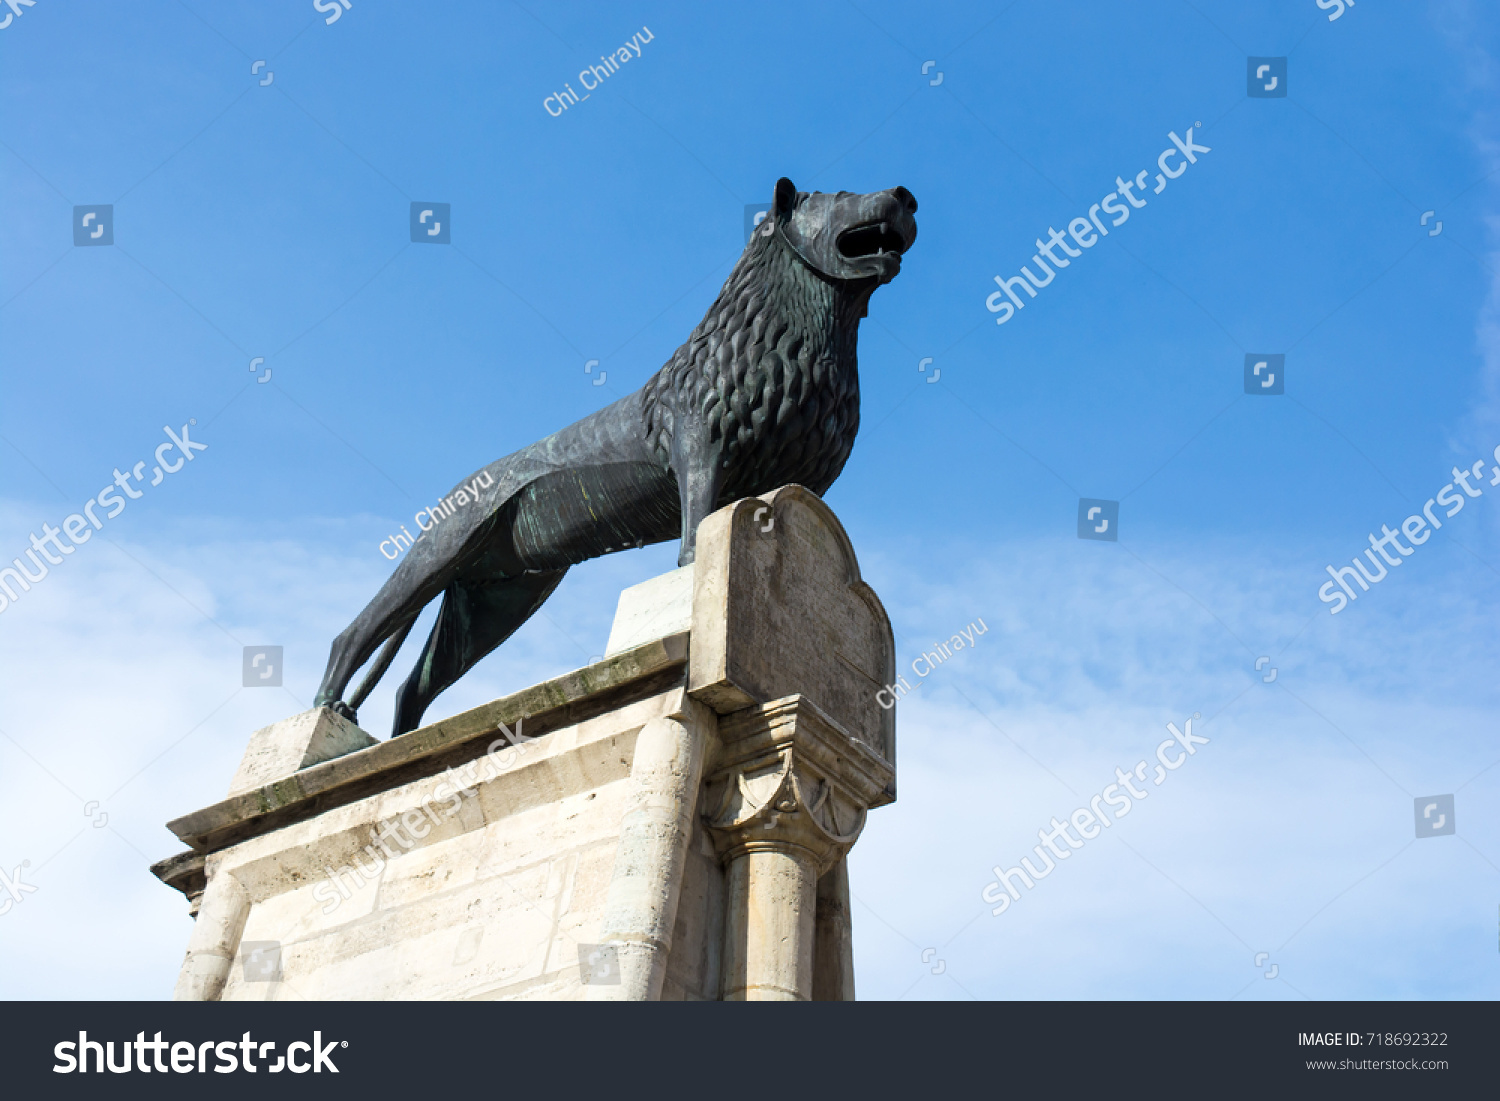 The Brunswick Lion on Burgplatz square near the Dankwarderode Castle and Brunswick Cathedral in Brunswick (Braunschweig), Germany #718692322